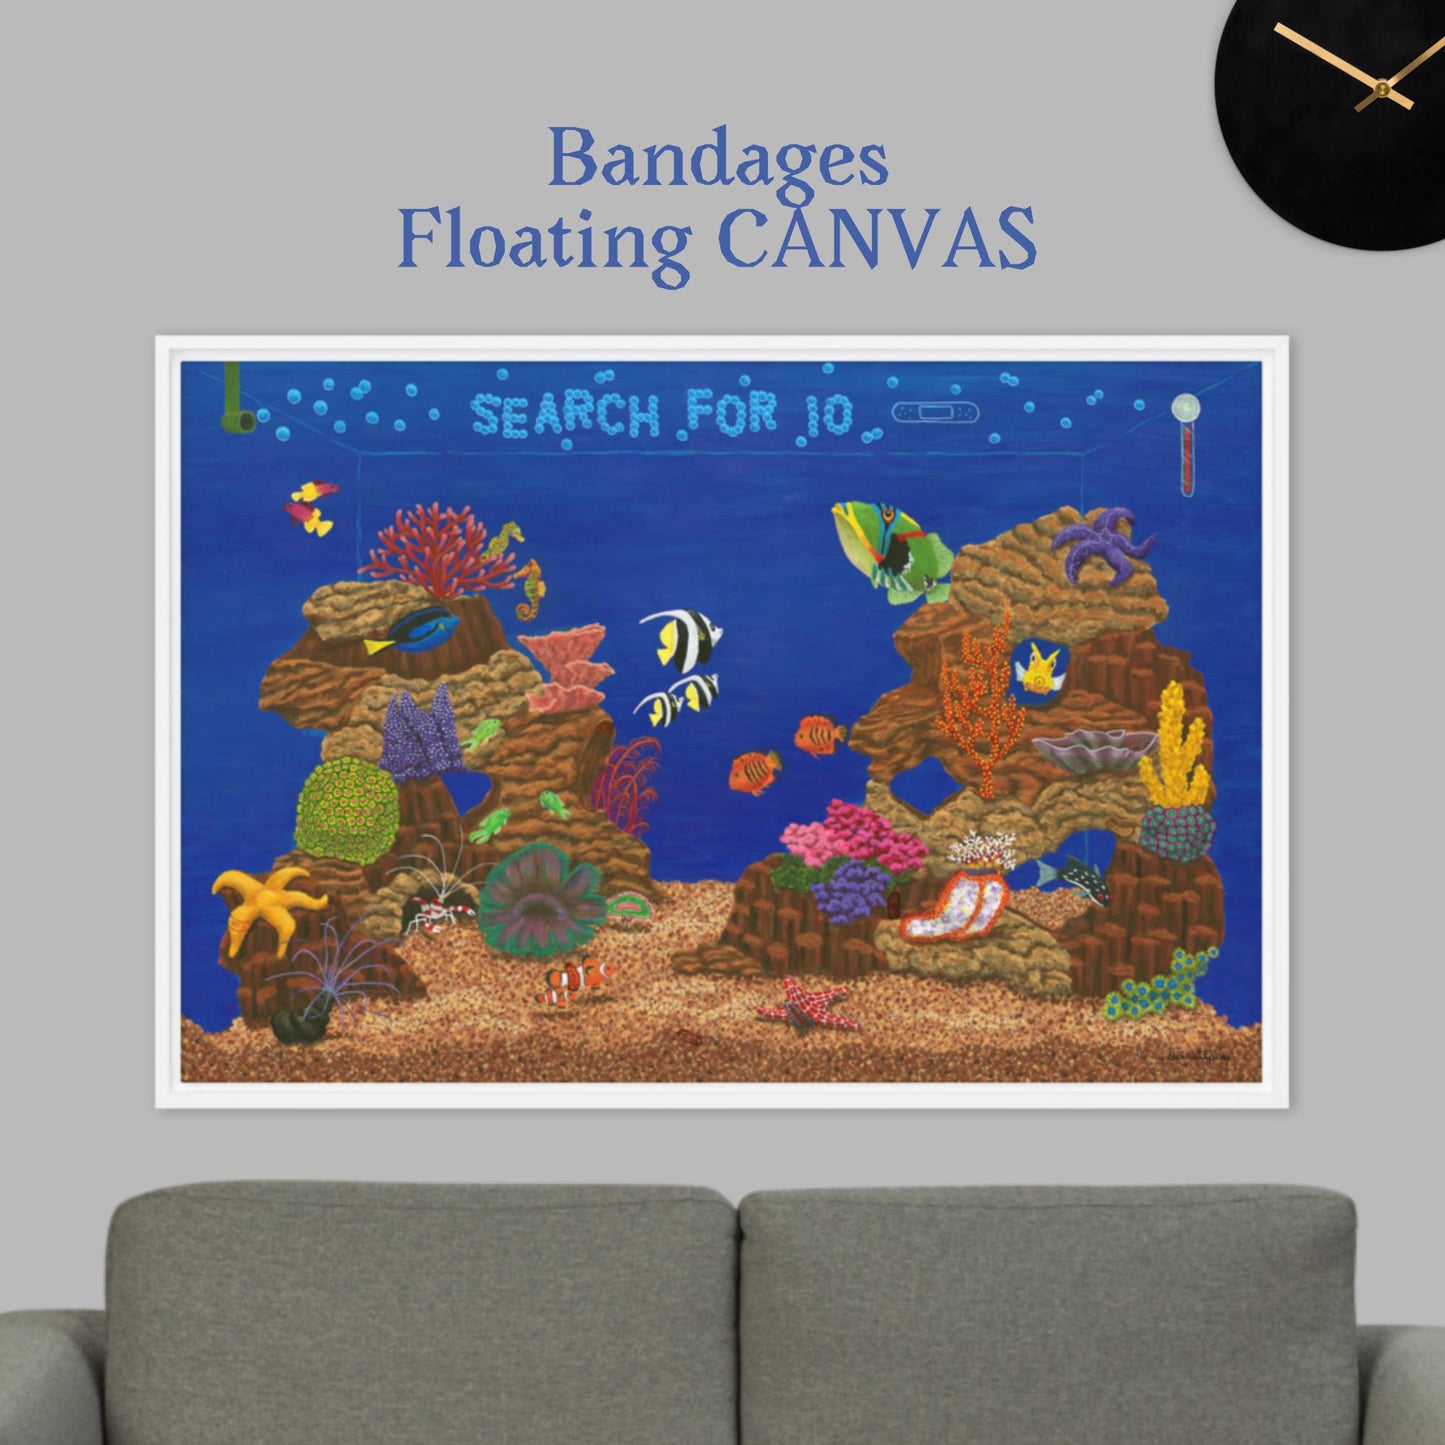 Fish Tank Favorites BANDAGES 24"x36" Floating CANVAS Artwork